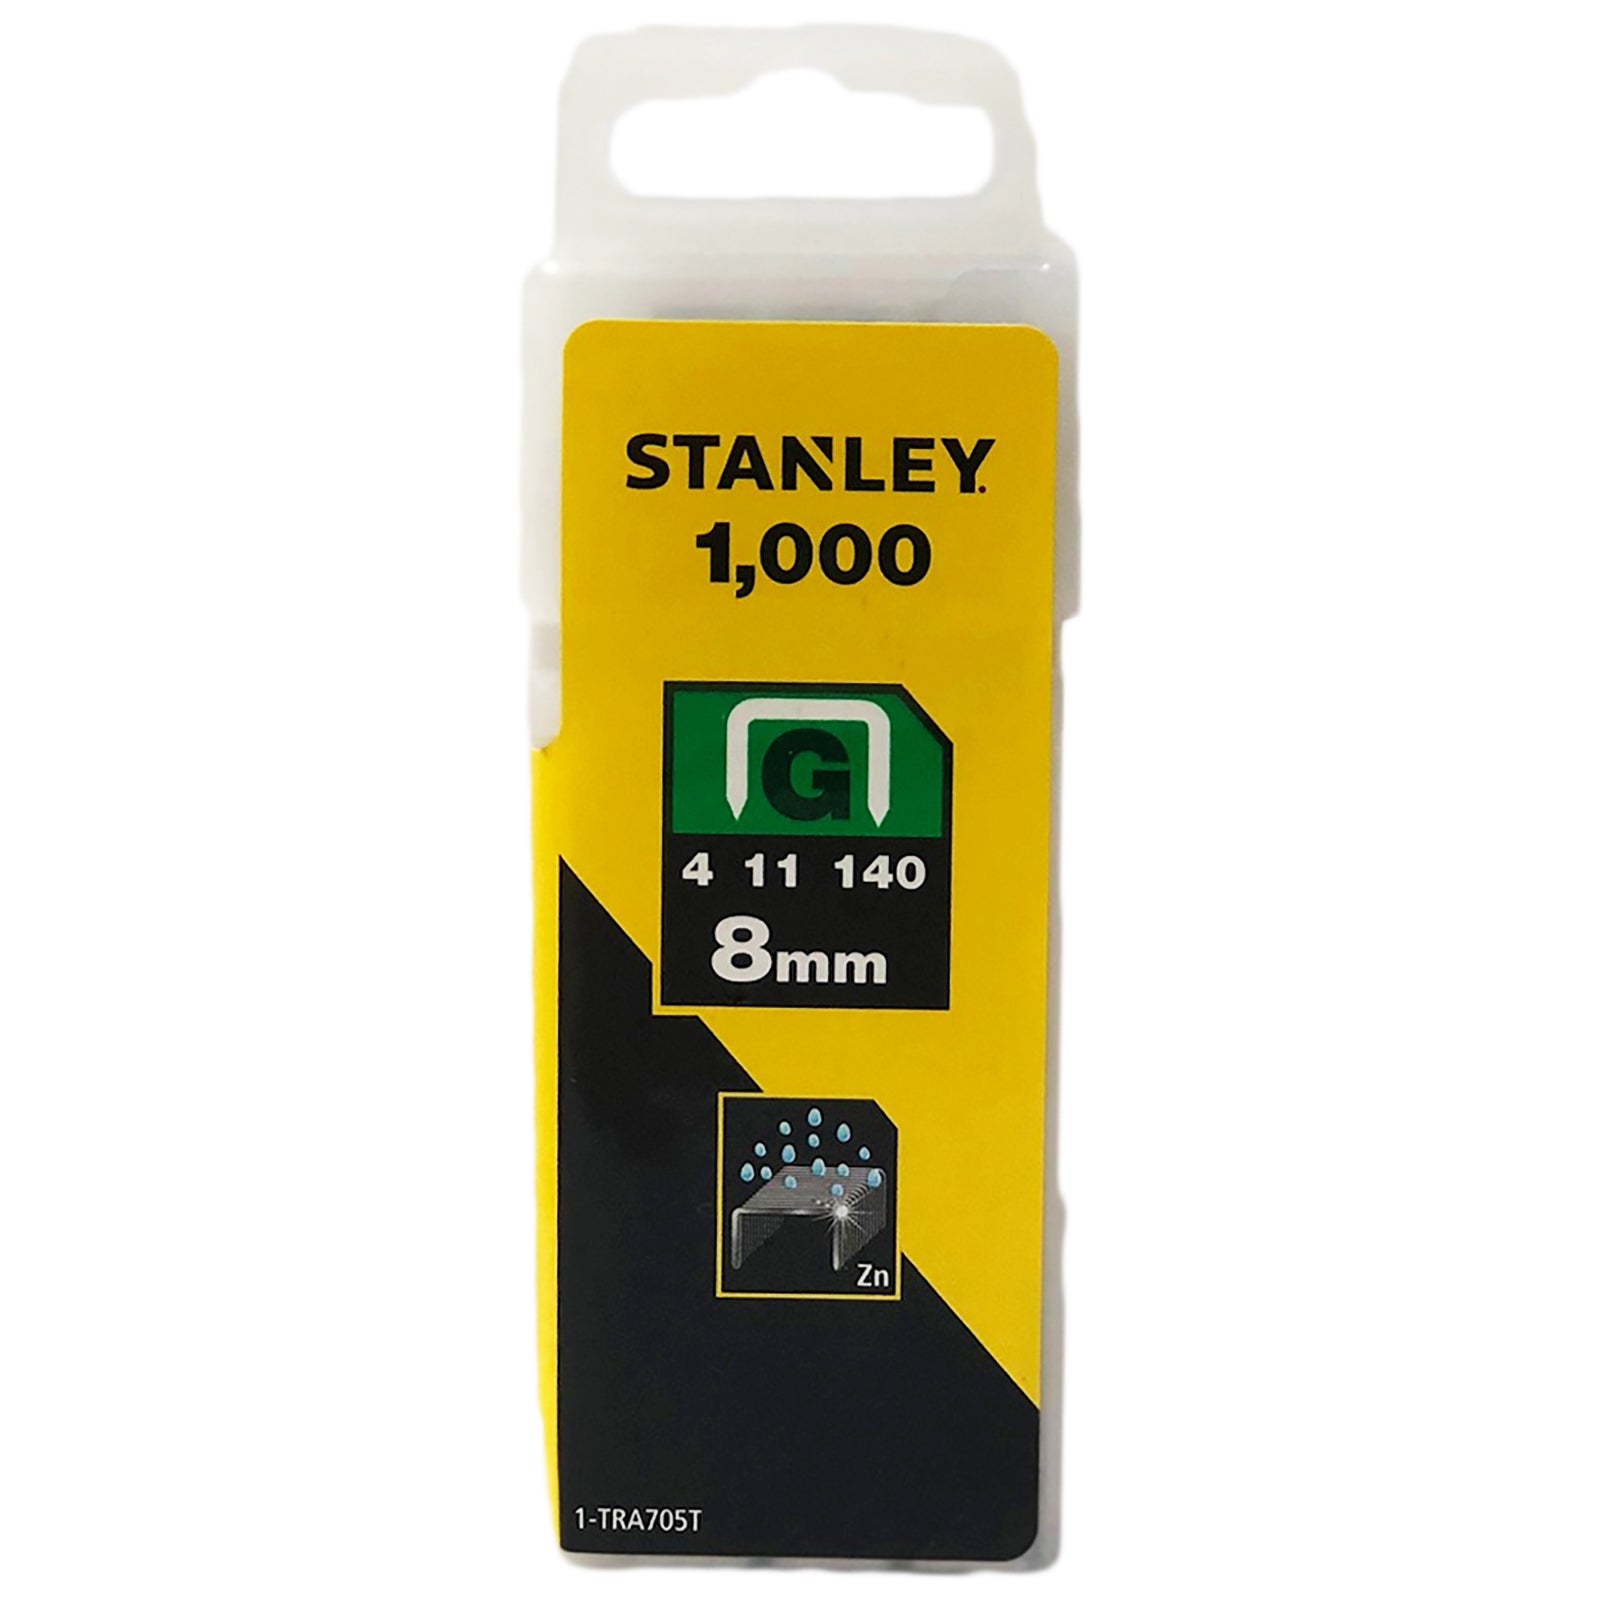 Stanley 1000 Piece Heavy Duty SharpShooter Staples Type G 4/11/140